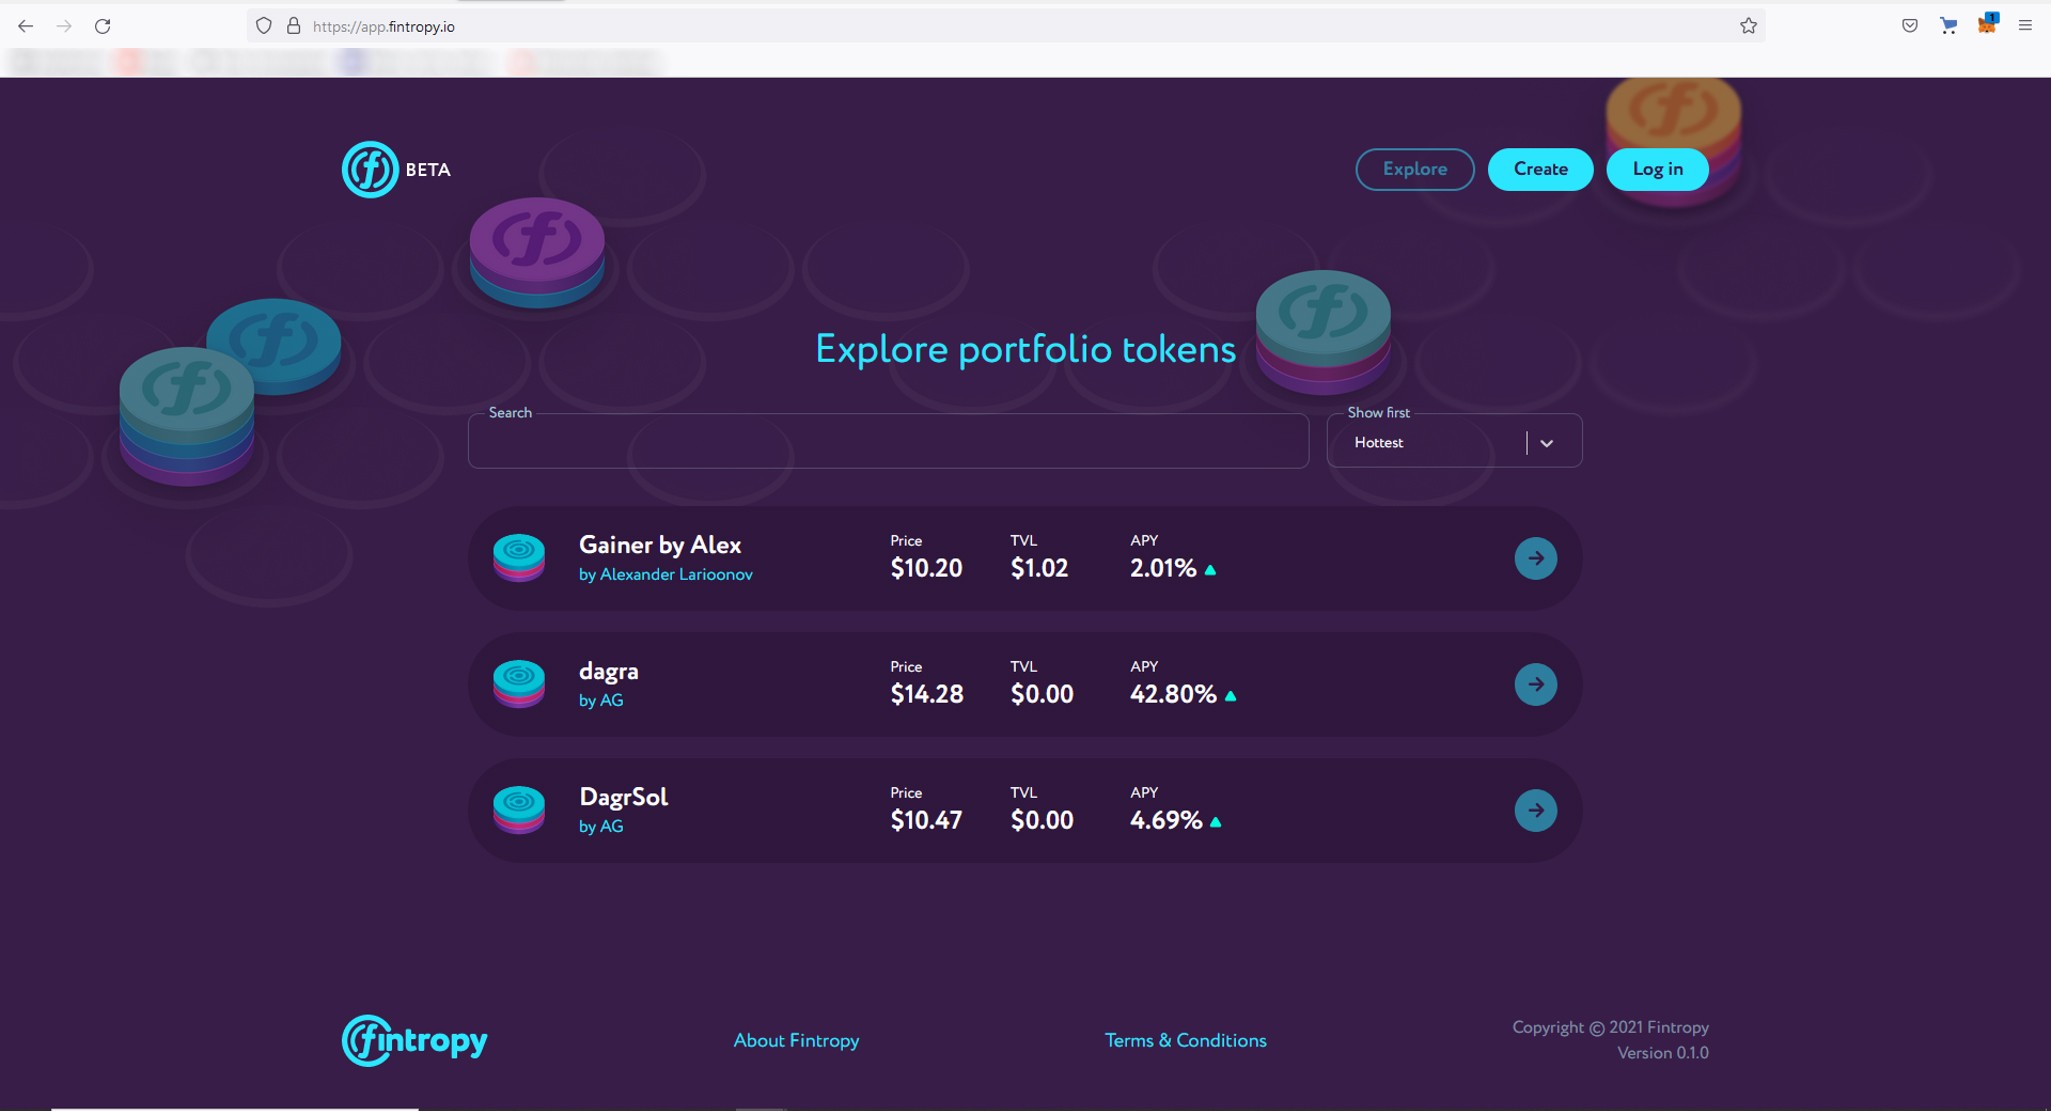 Fintropy Platform Overview